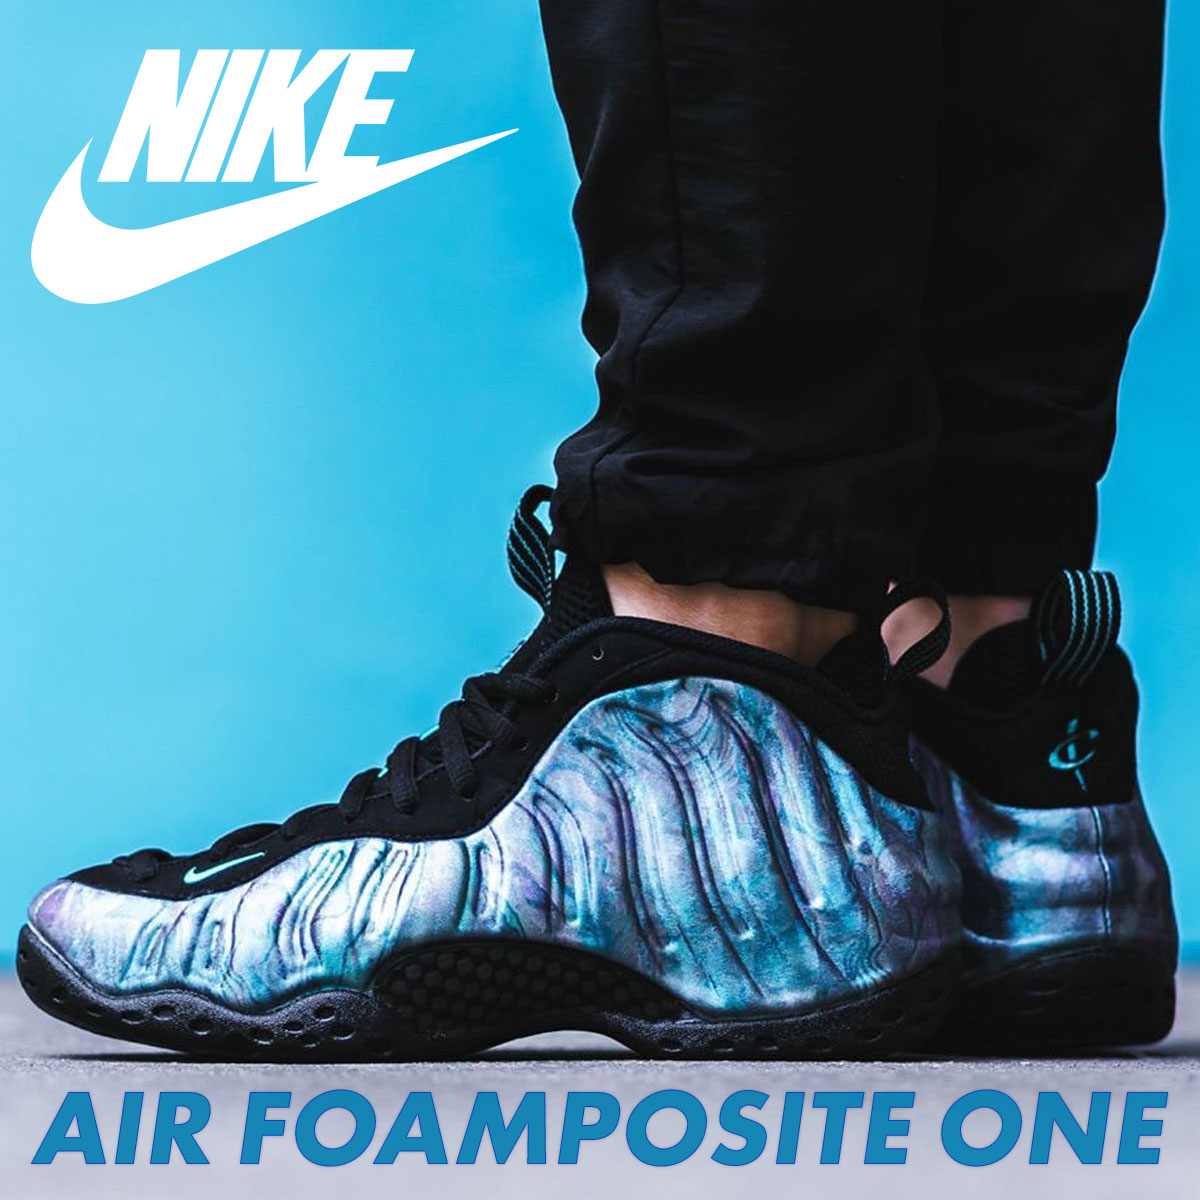 Nike Air Foamposite One (2016) Shoes .com